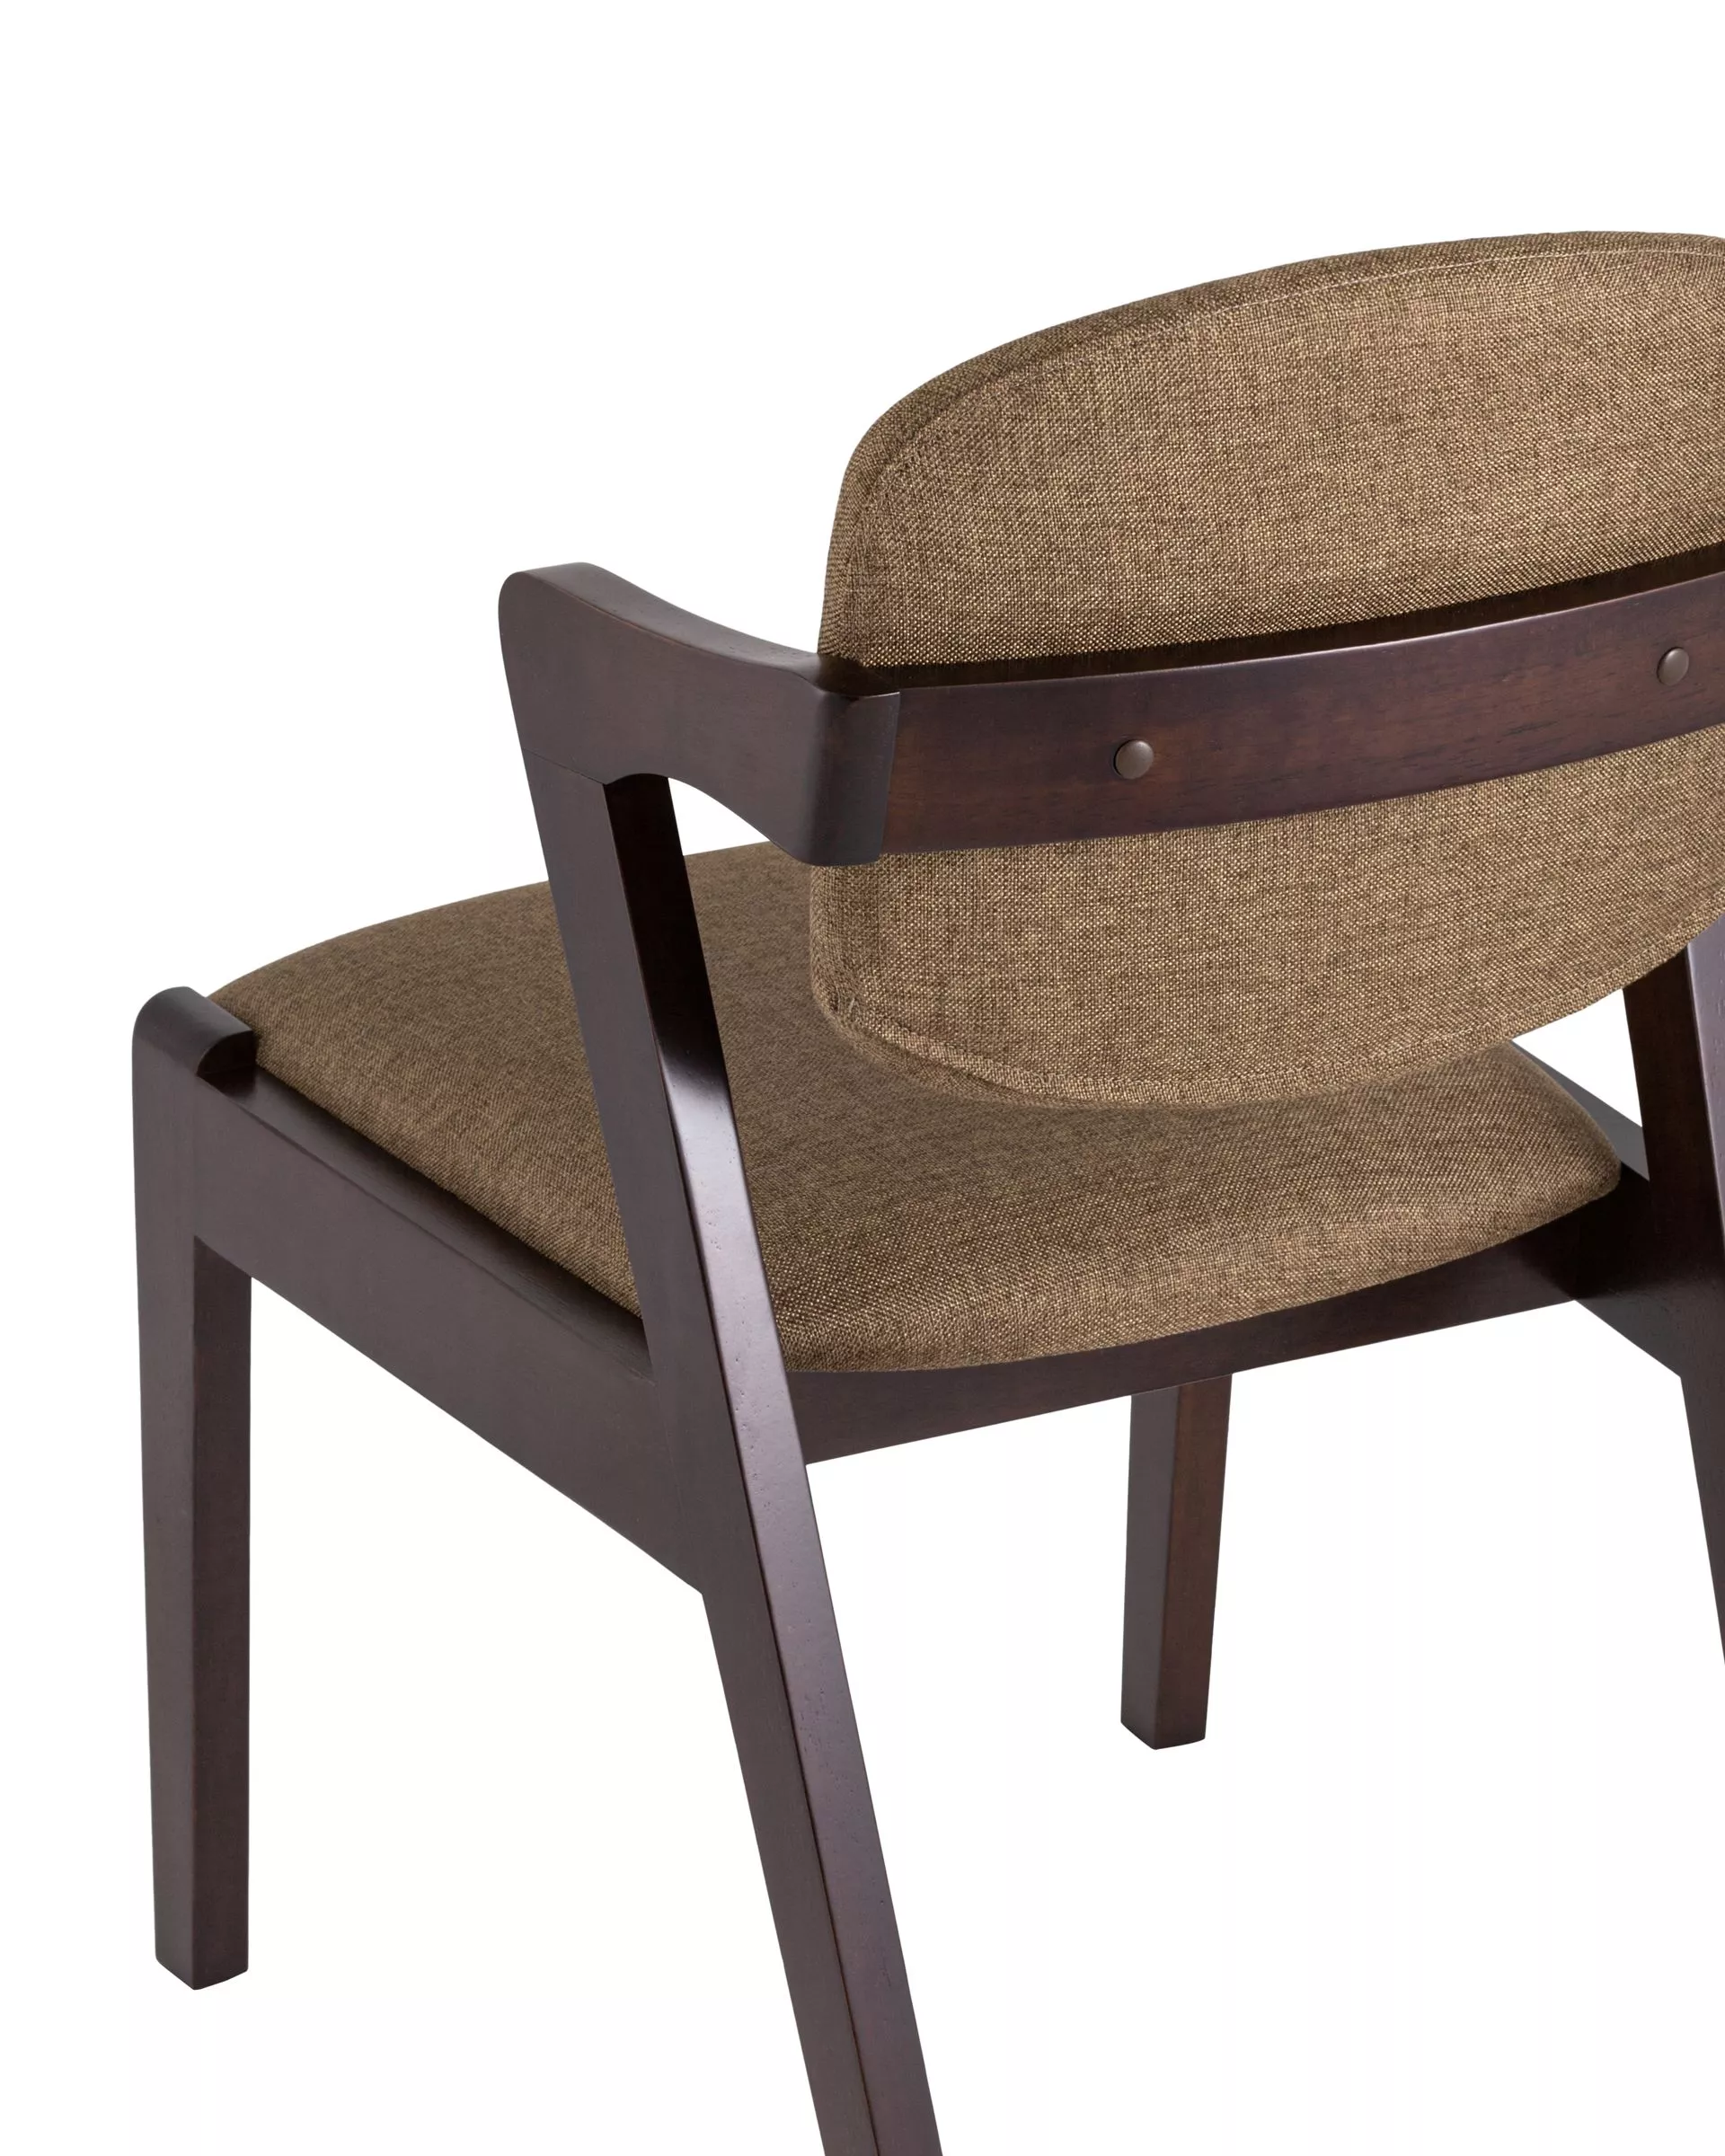 Комплект стульев VIVA кофейный 2 шт